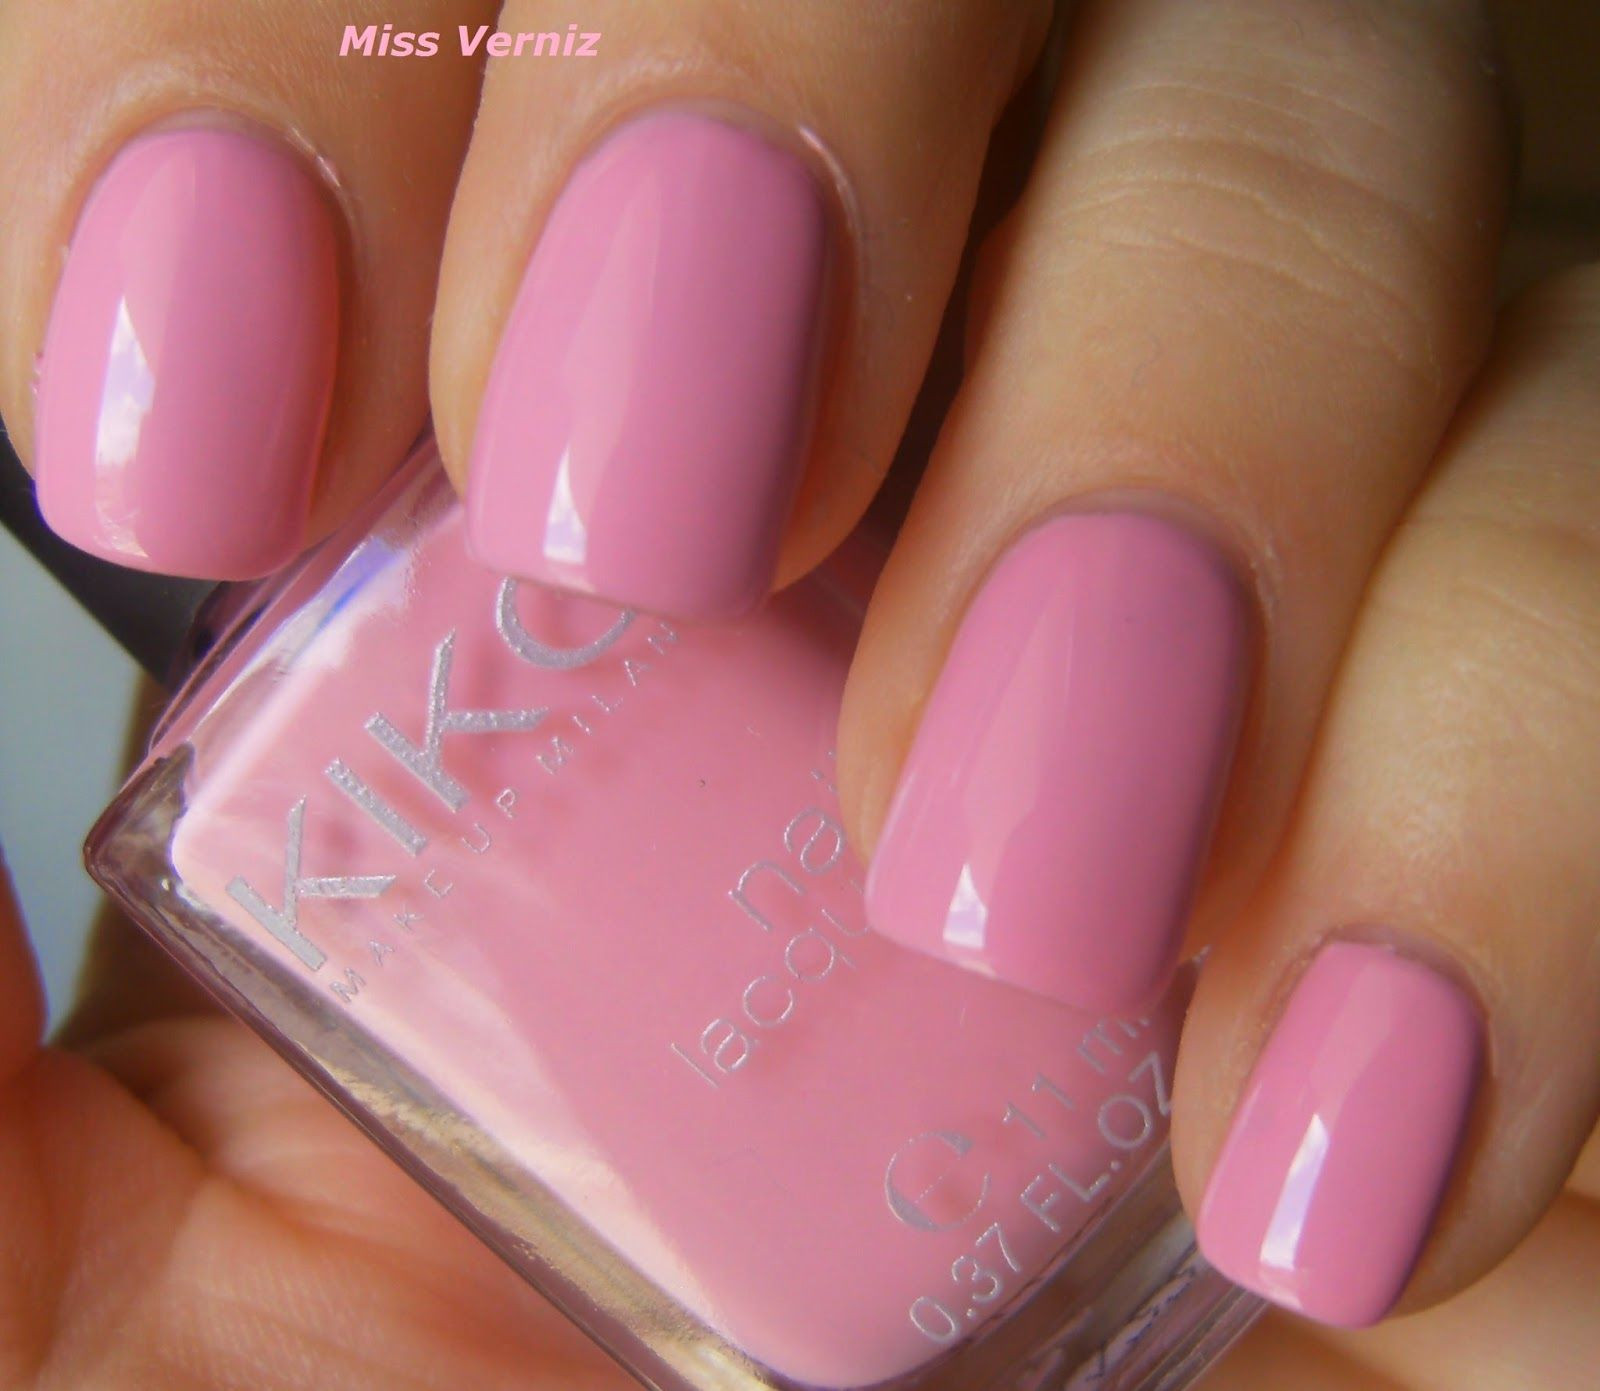 Venus Beautiful Nails
 Kiko 506 Venus Pink